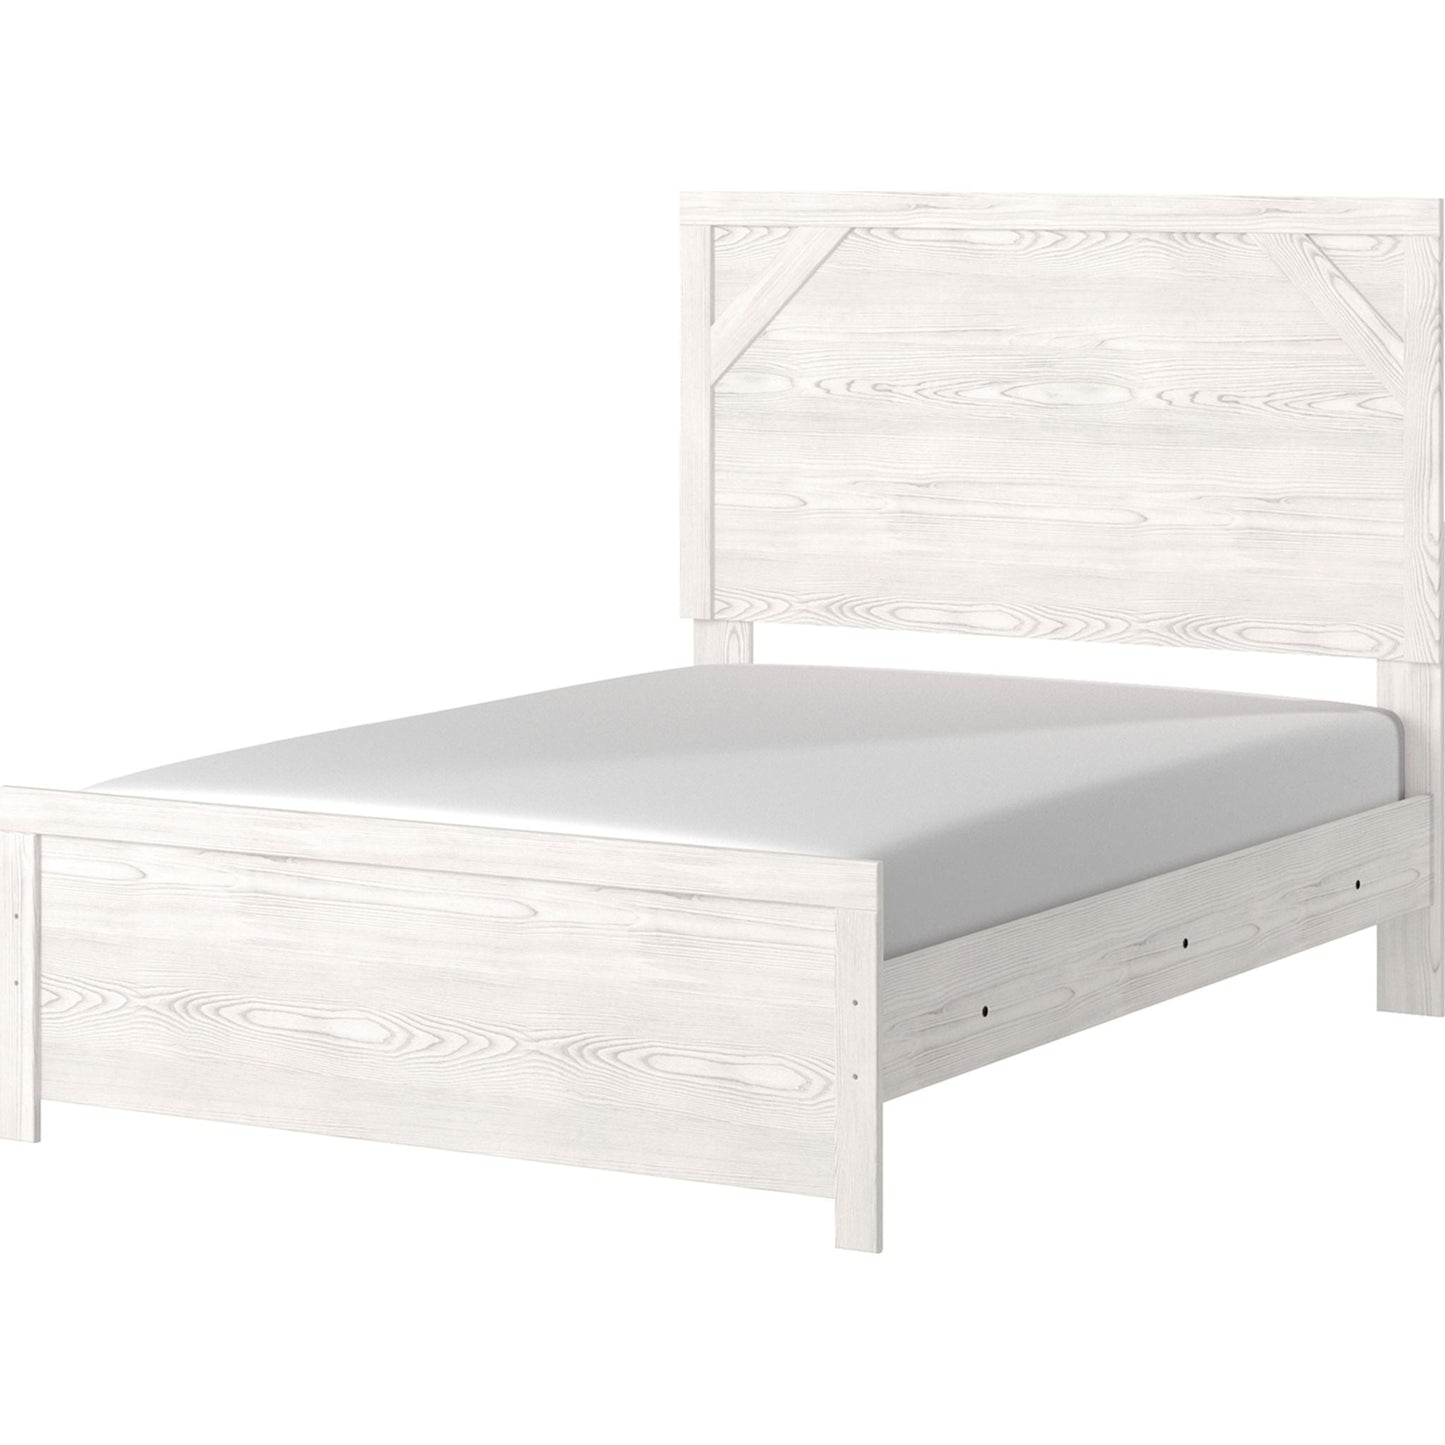 Gerridan 3 Piece Full Bed - White/Gray